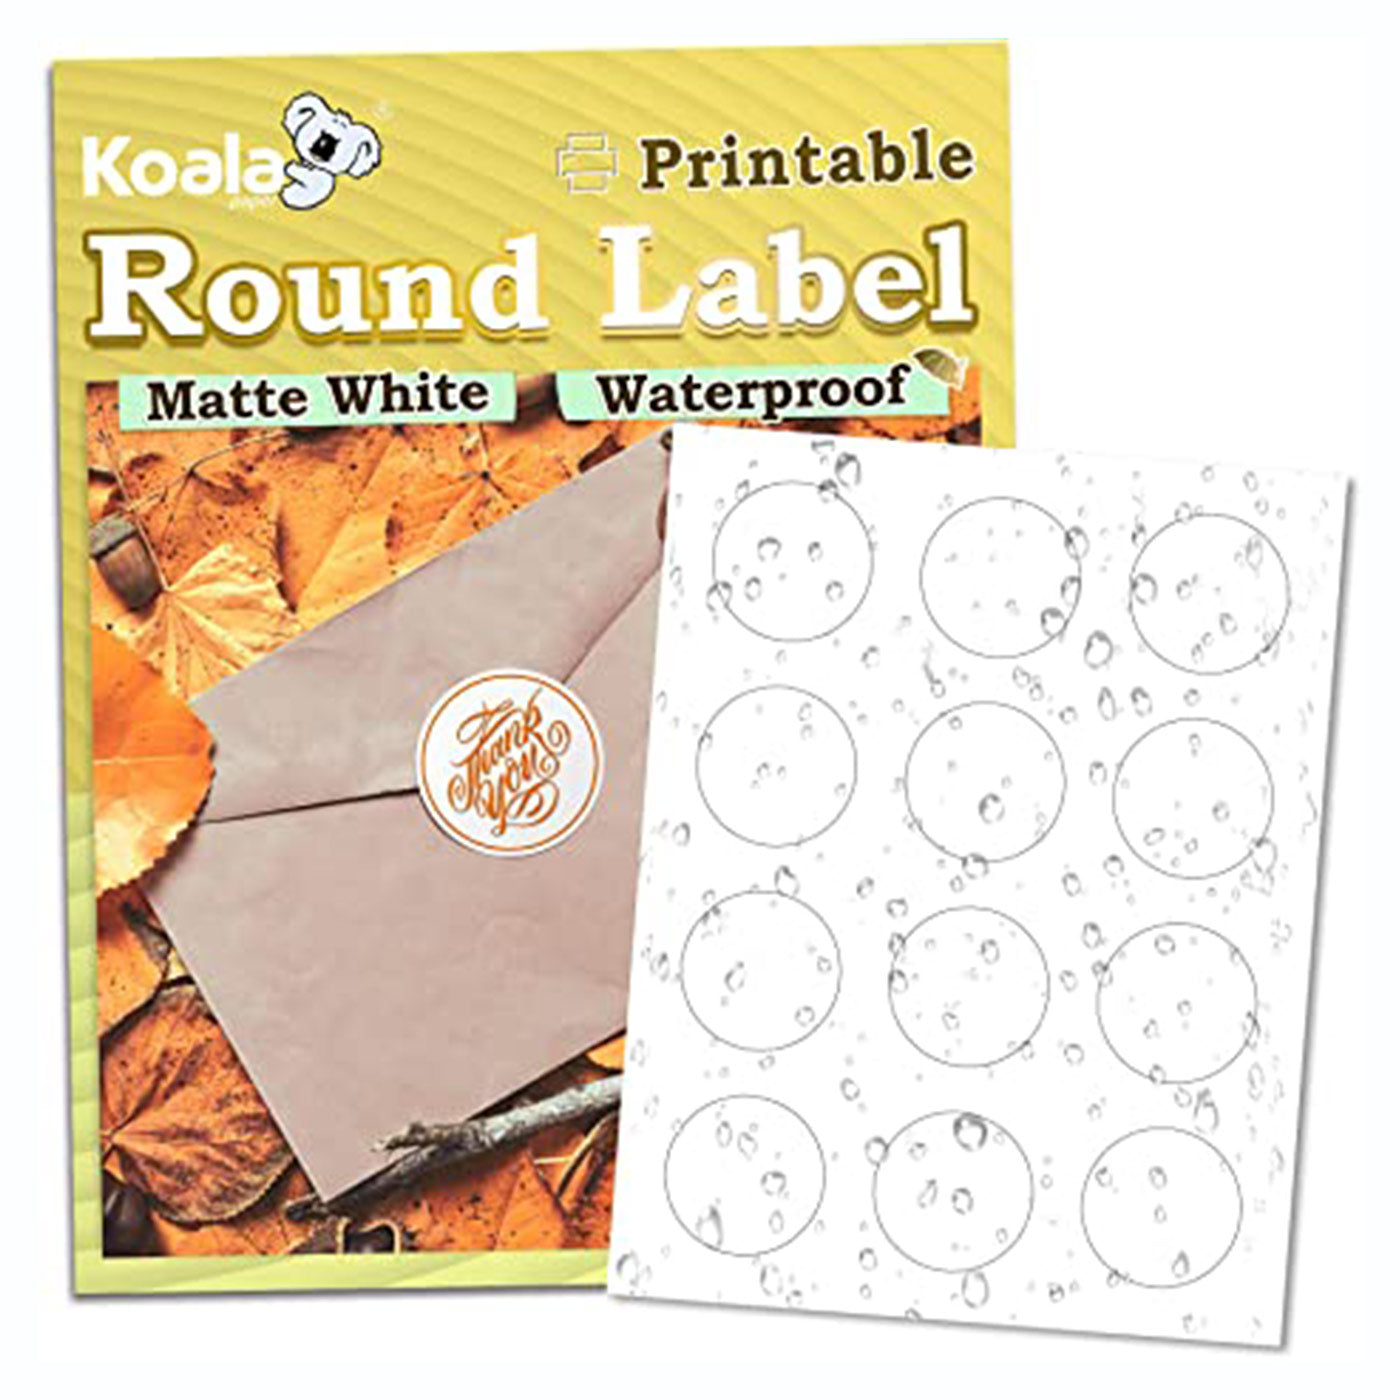 30 Sheets Koala Laser Printable Vinyl Sticker Paper Glossy Waterproof White Full Sheet Label Decal Paper 8.5x11 inch